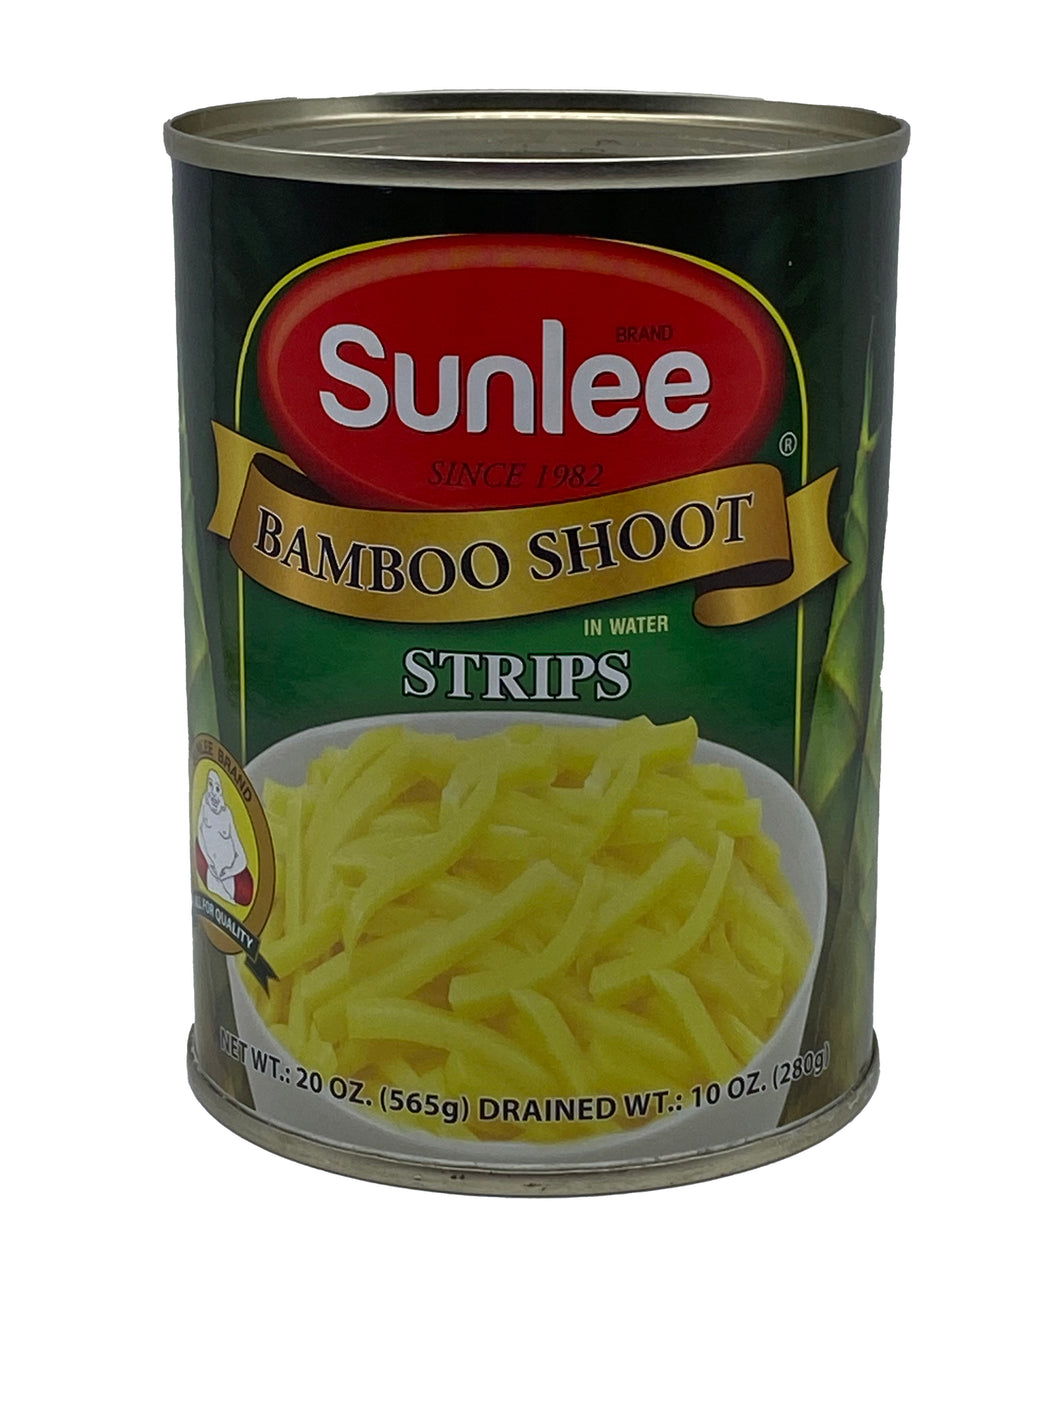 Sunlee Bamboo Shoot Strips